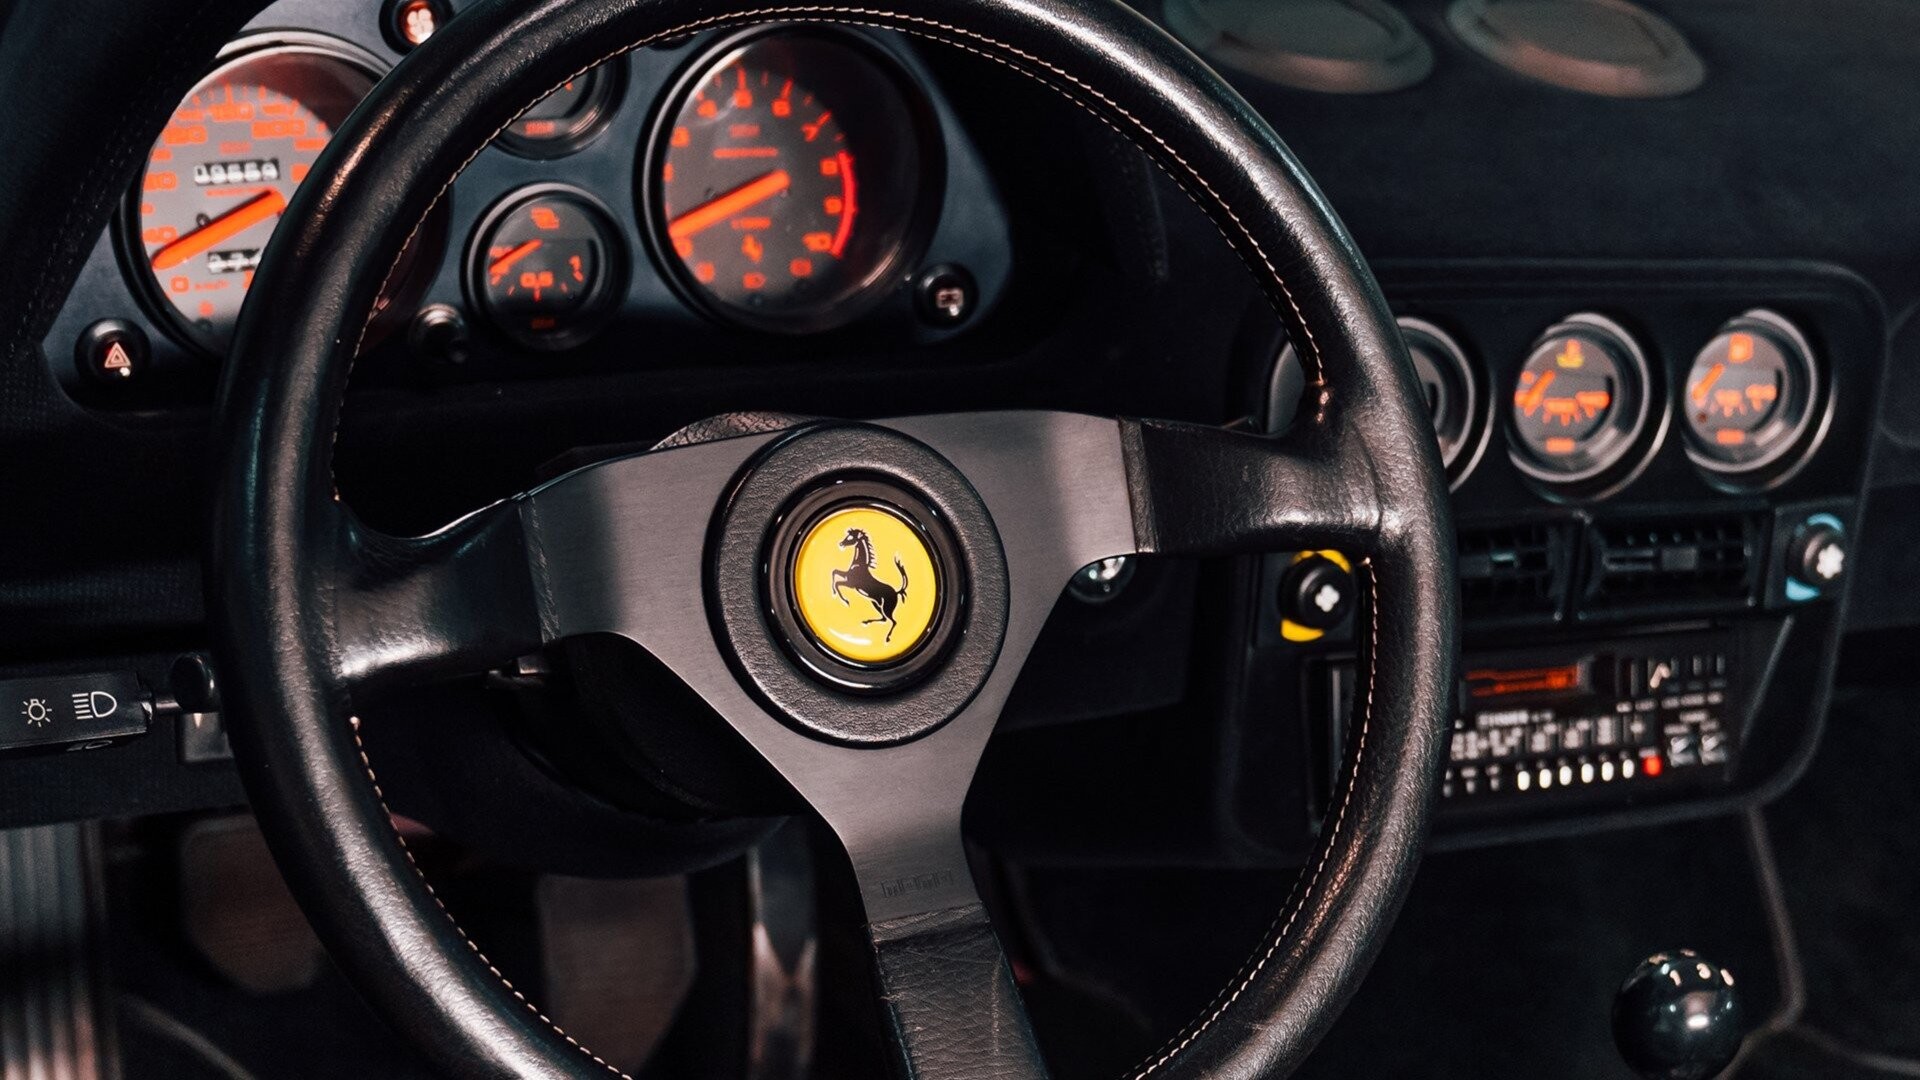 Ferrari 288 GTO из коллекции французского гонщика продали